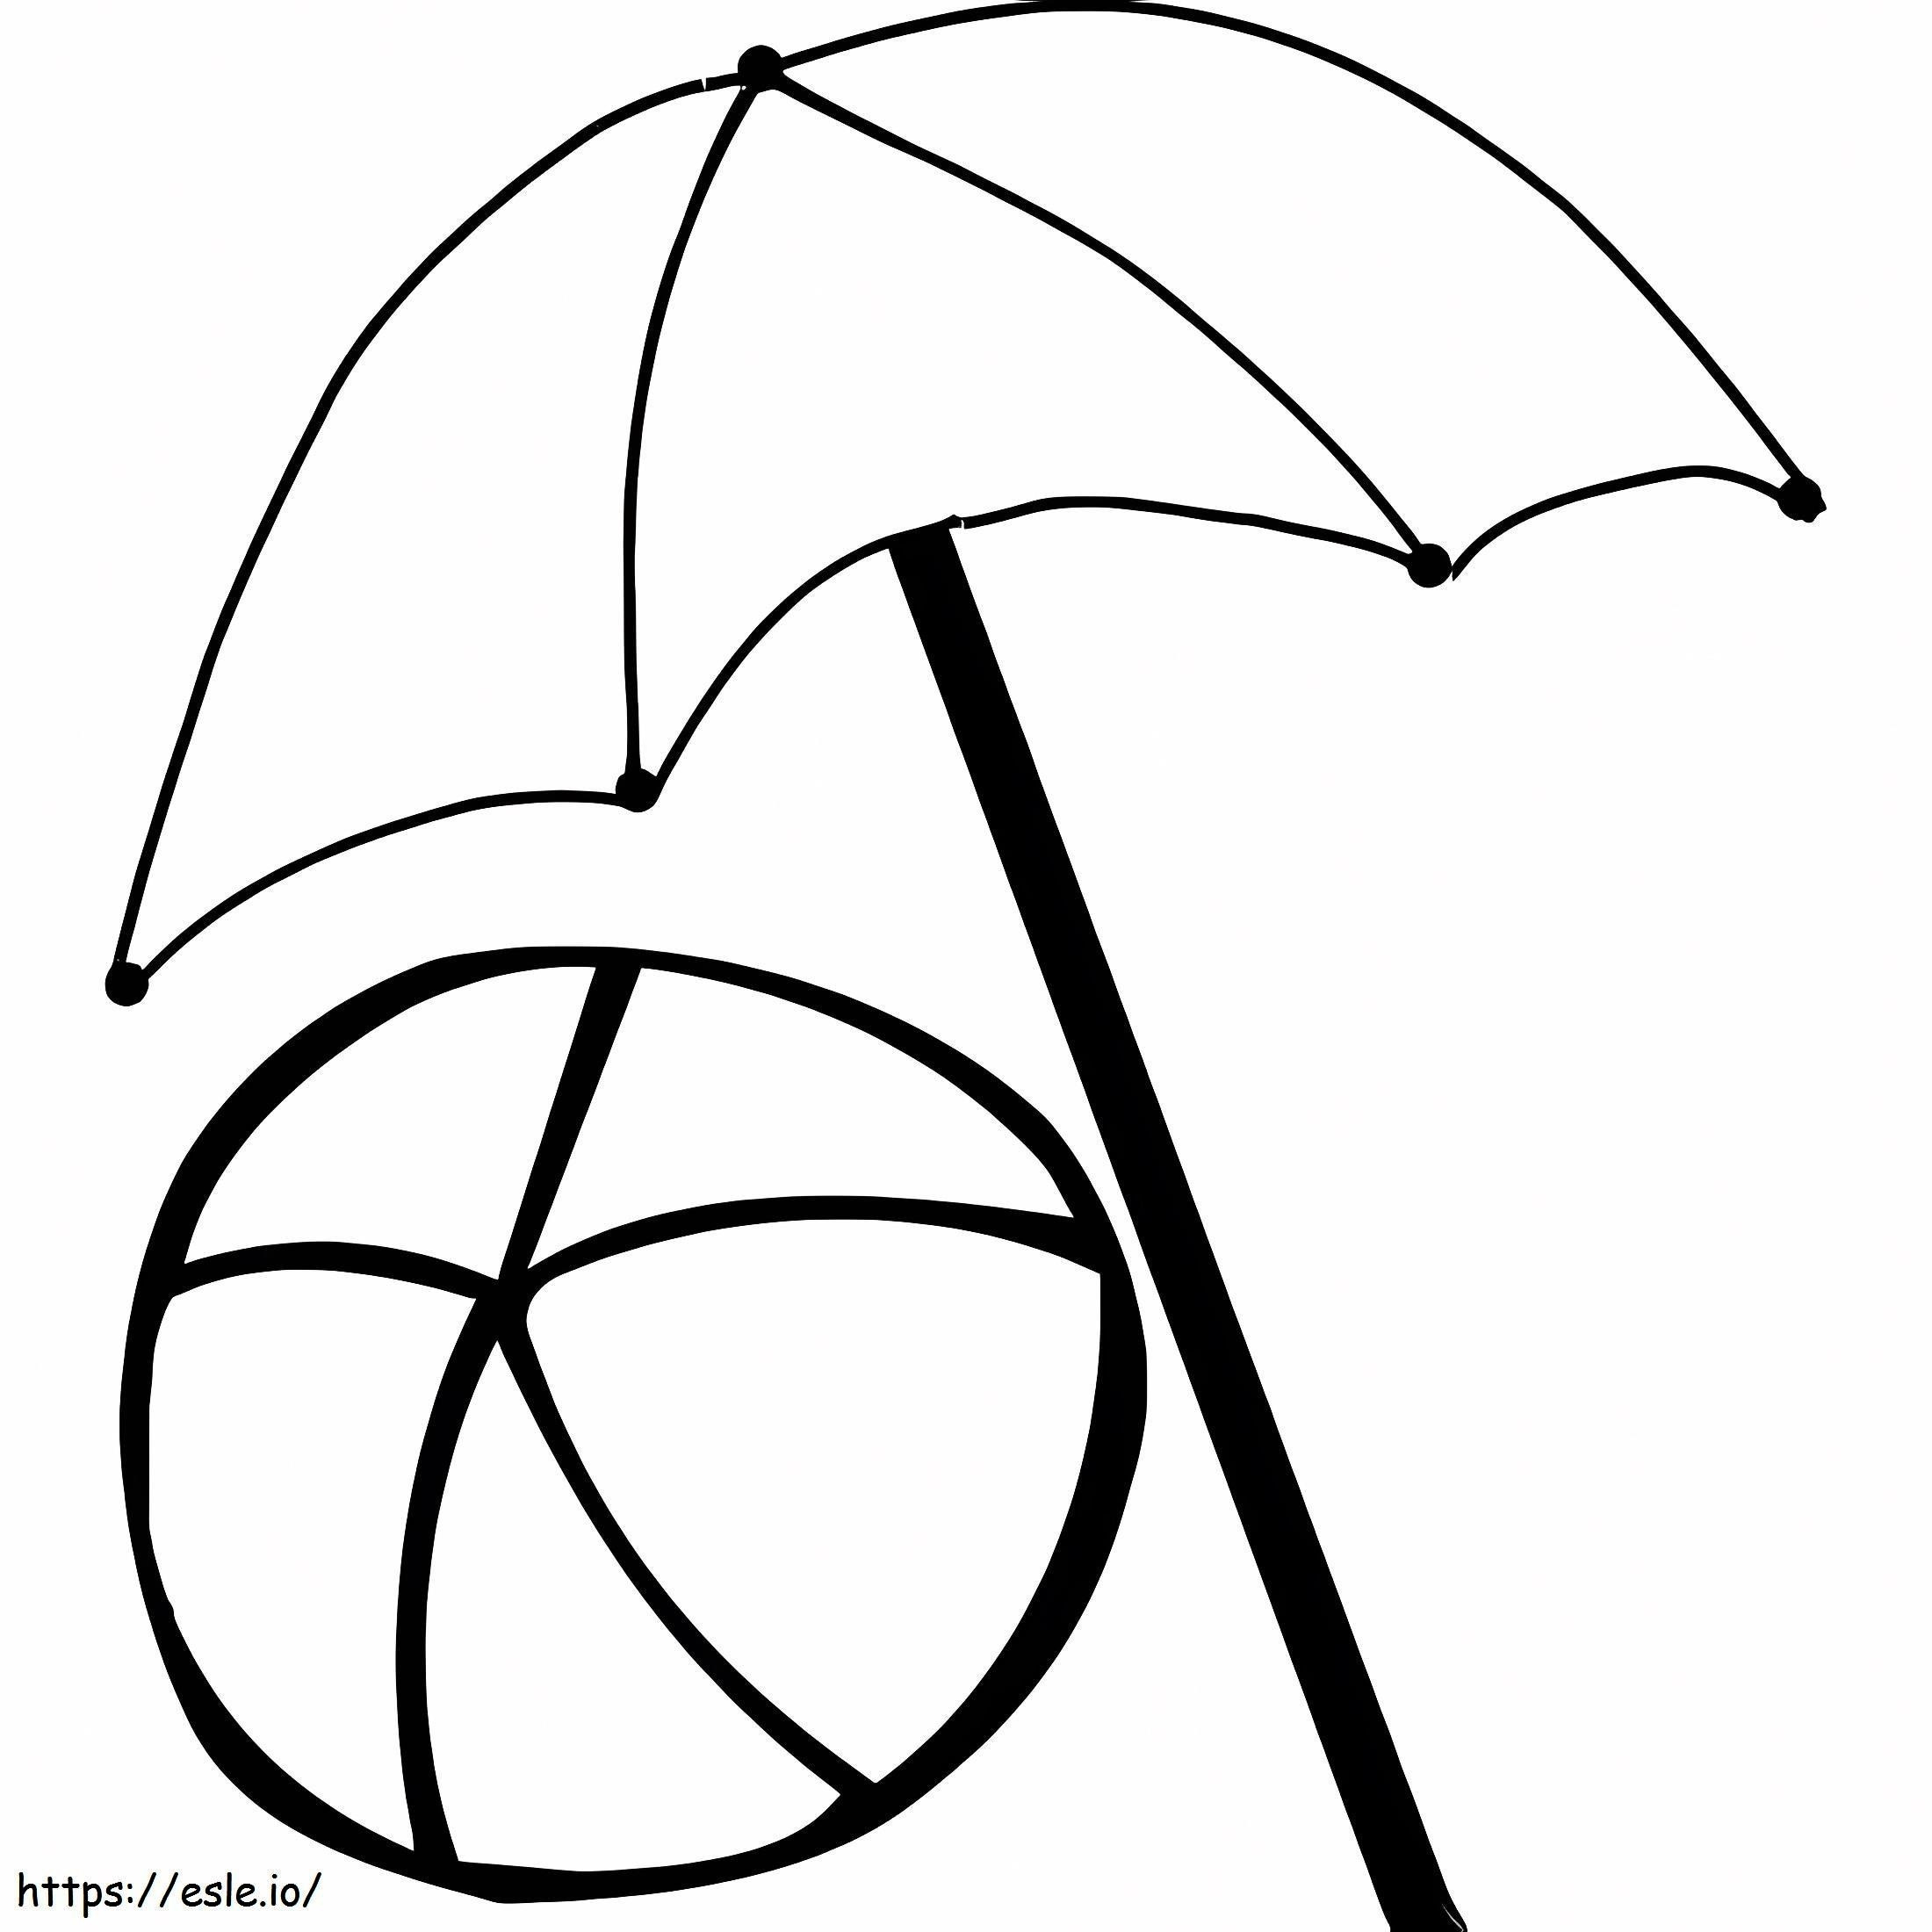 Bola de praia com guarda-chuva para colorir